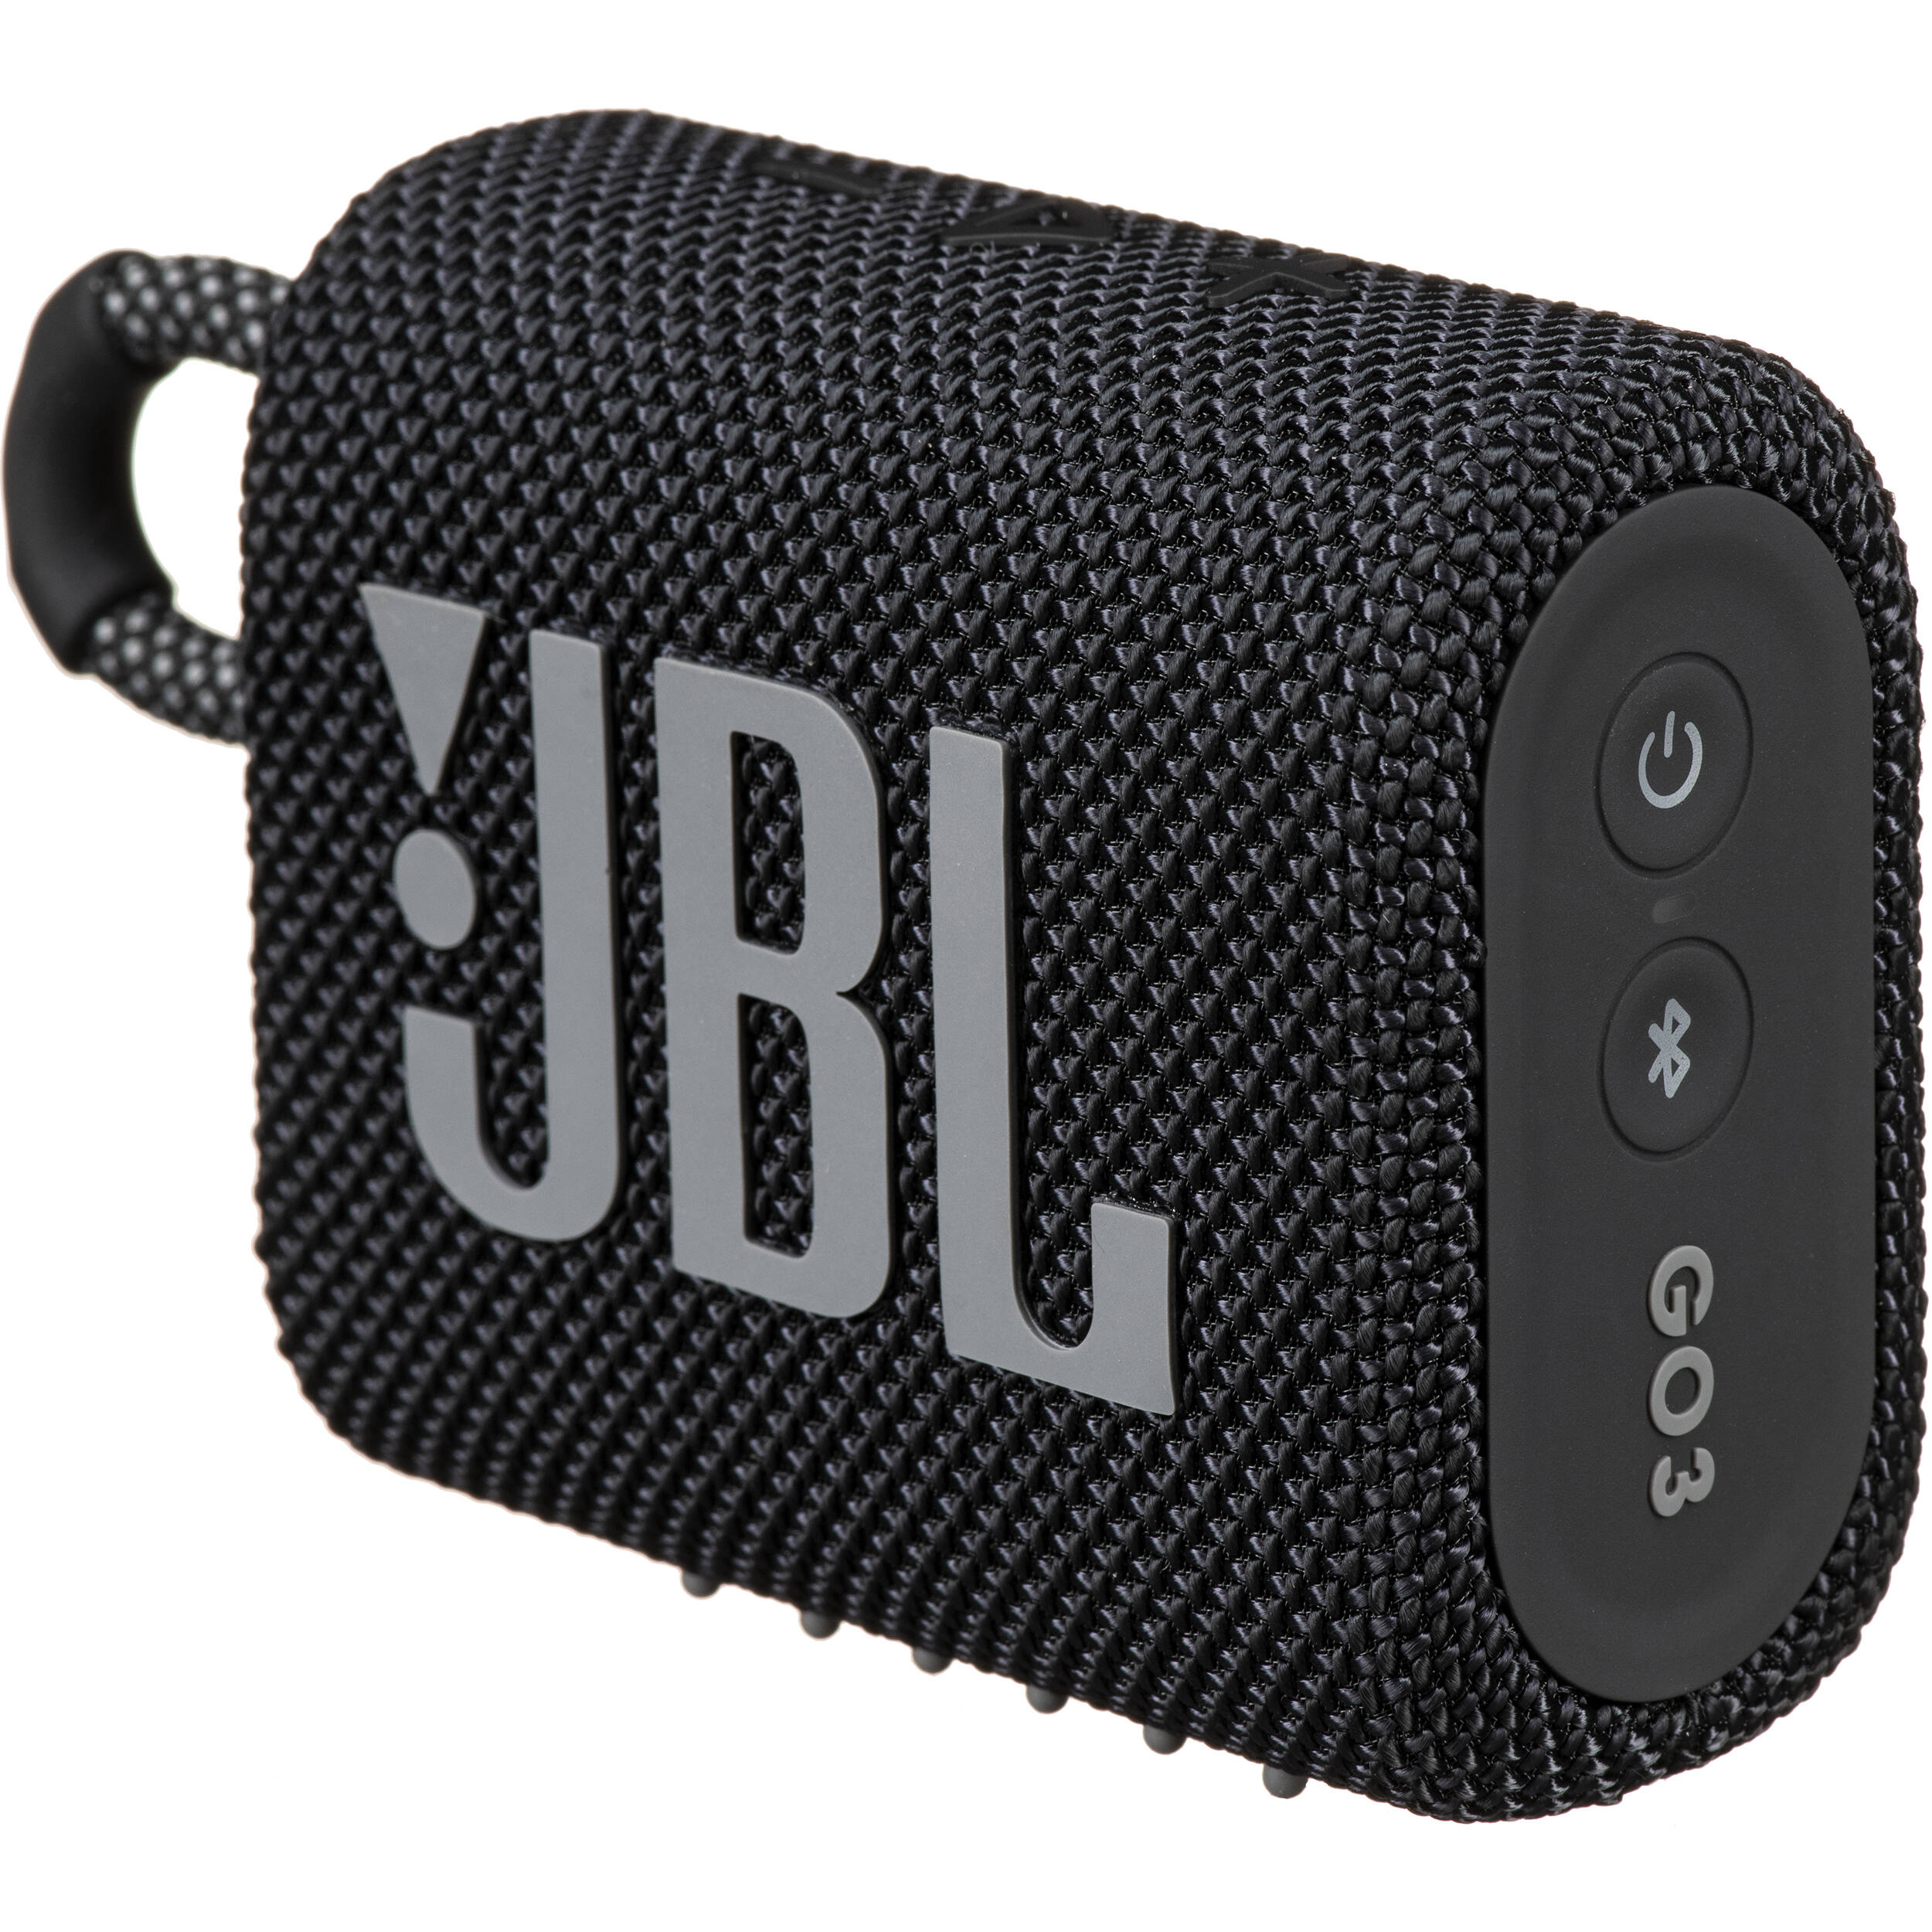 Jbl go 3 цены. Bluetooth JBL go. Колонка JBL go Black. Портативная акустика JBL go 3 черный. Колонка JBL go 3 серая.